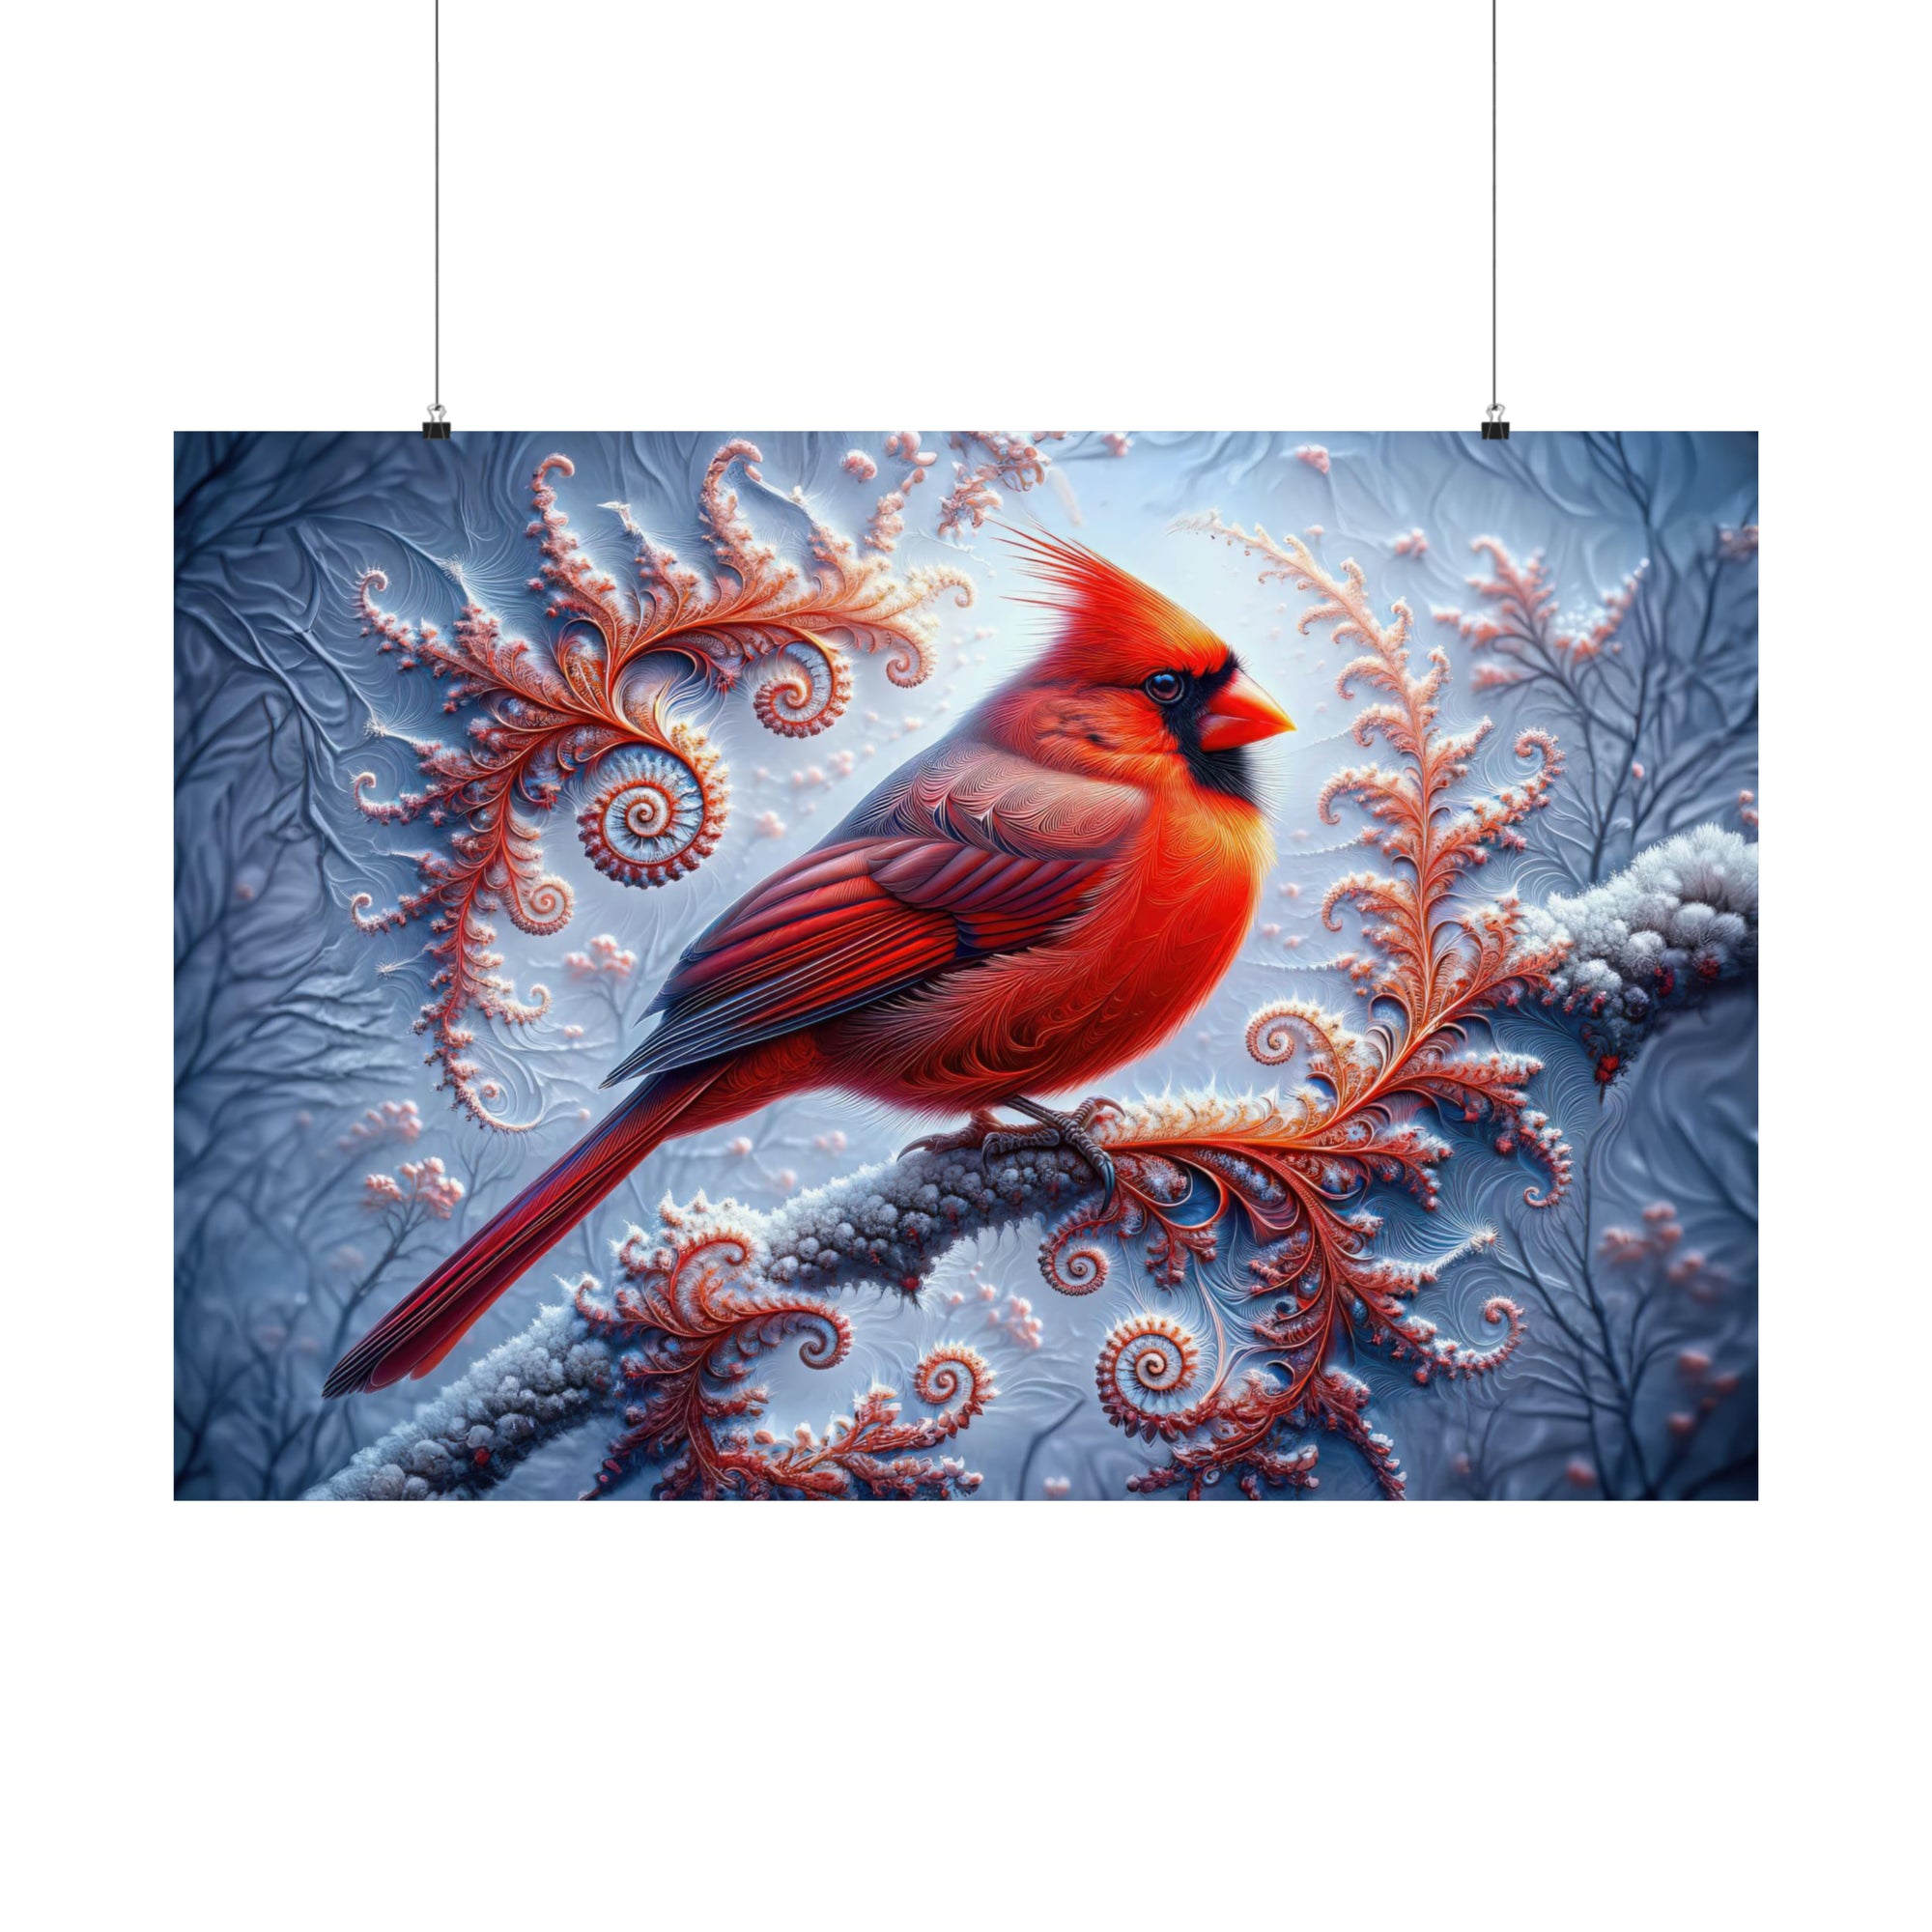 The Cardinal's Fractal Winter Poster